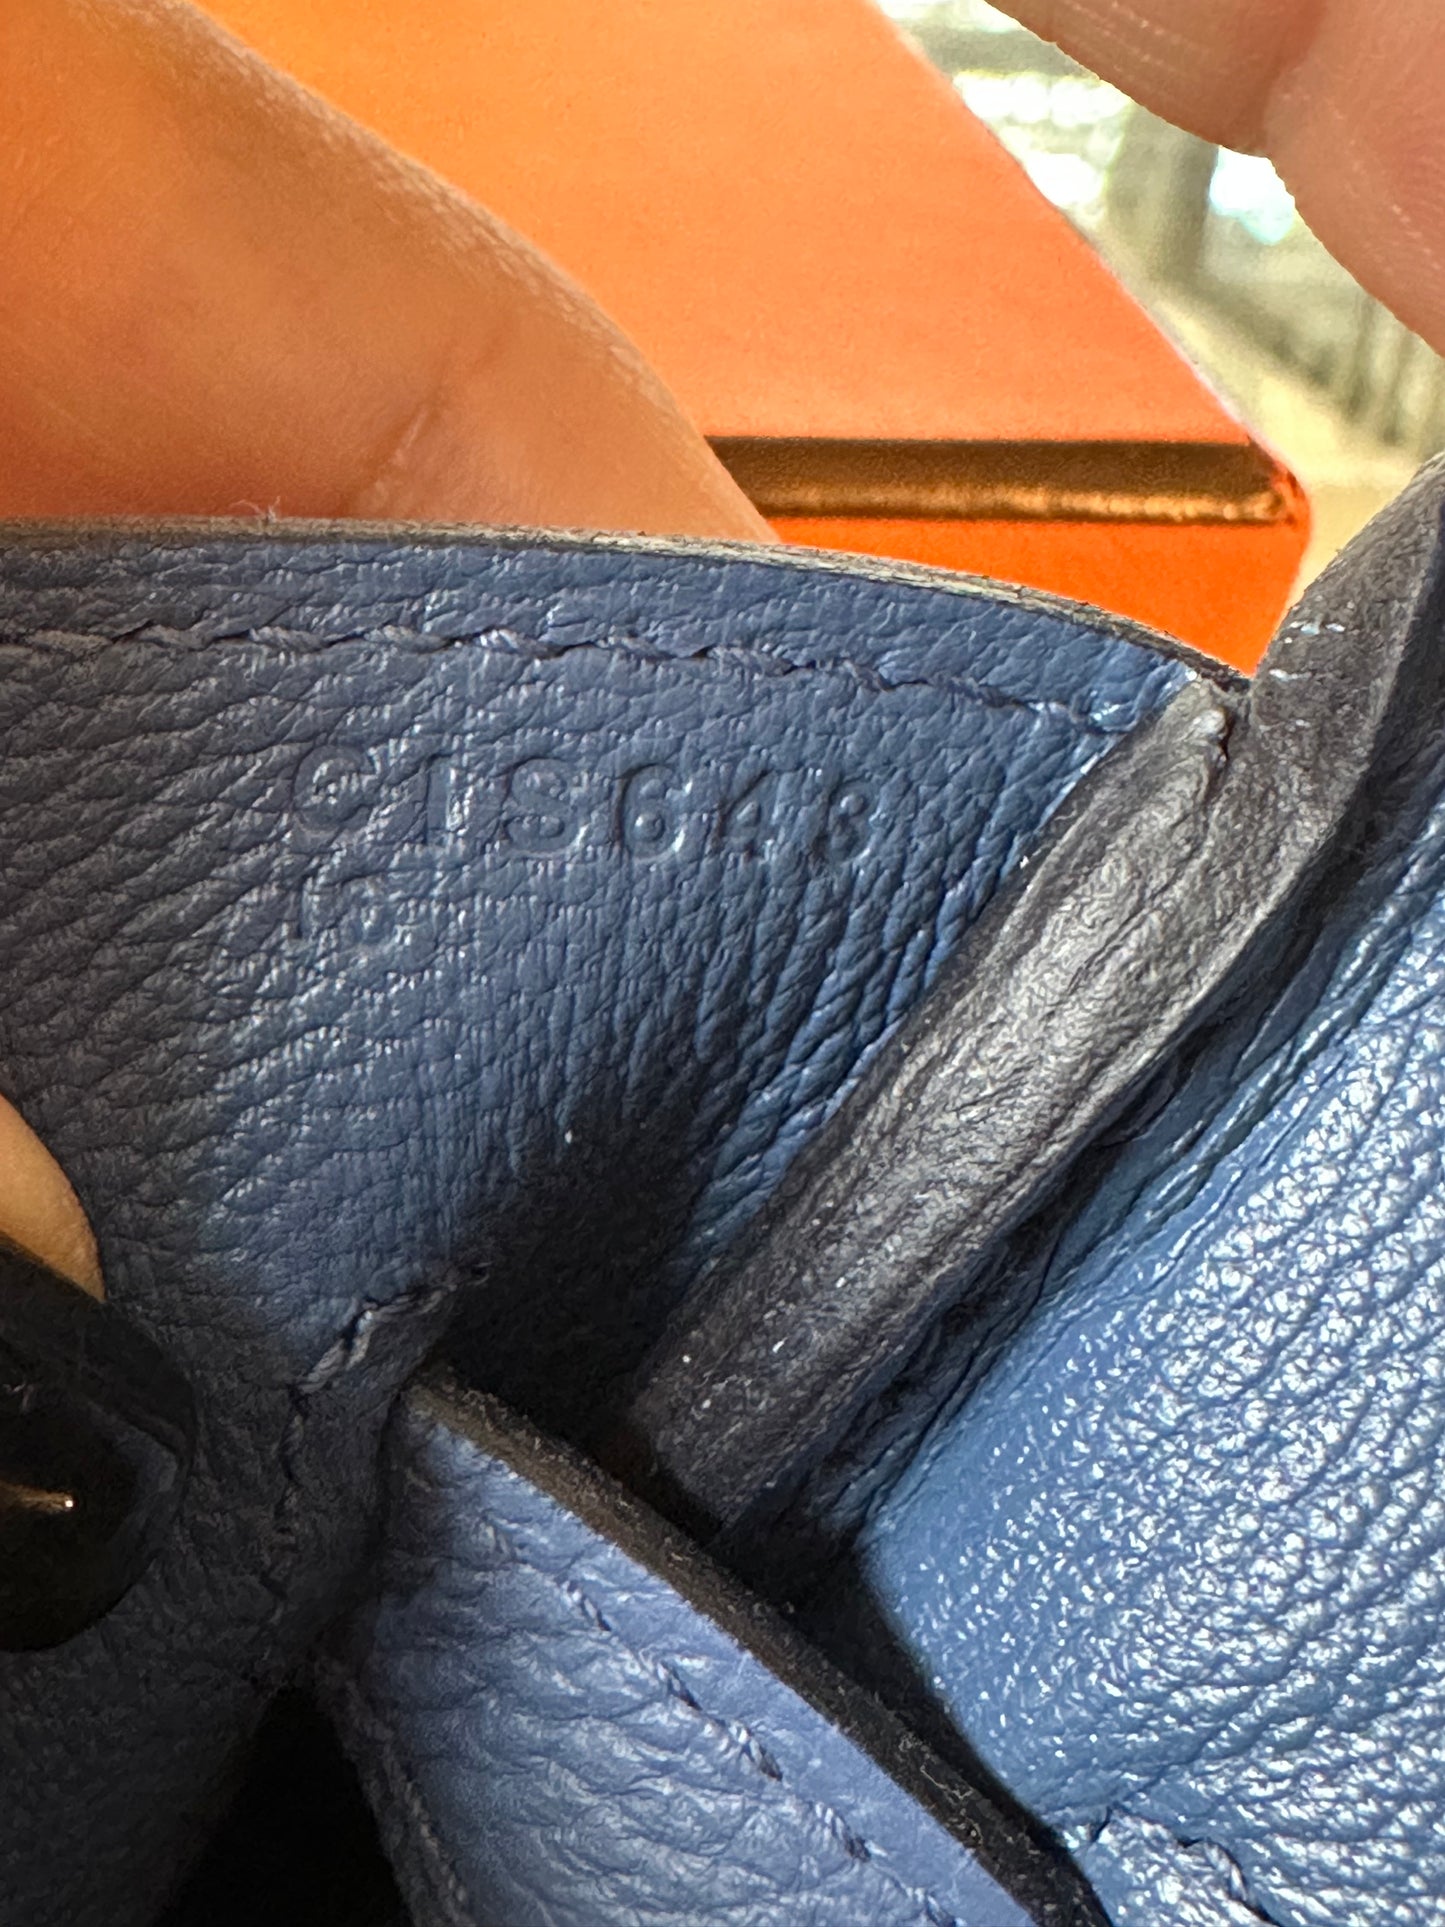 Hermes Birkin 35 Blue Bleau Brighton Togo Leather Palladium Hardware PHW Pre-Owned Bag Handbag